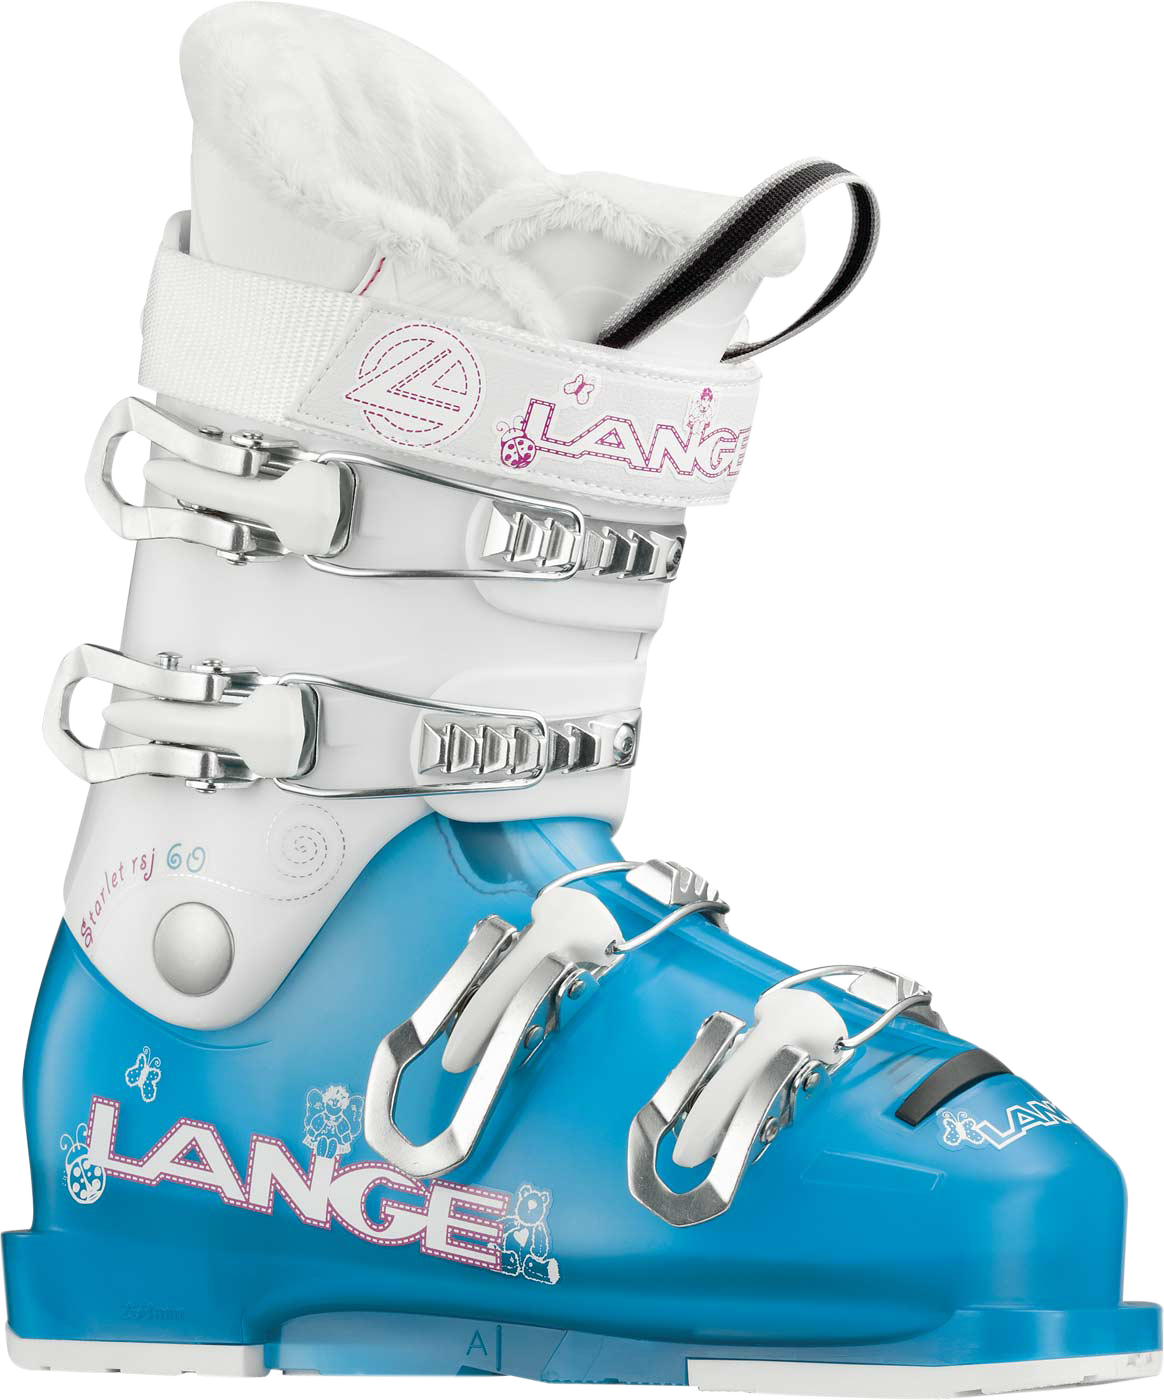 Lange Starlet 60 Junior Ski Boot 2019